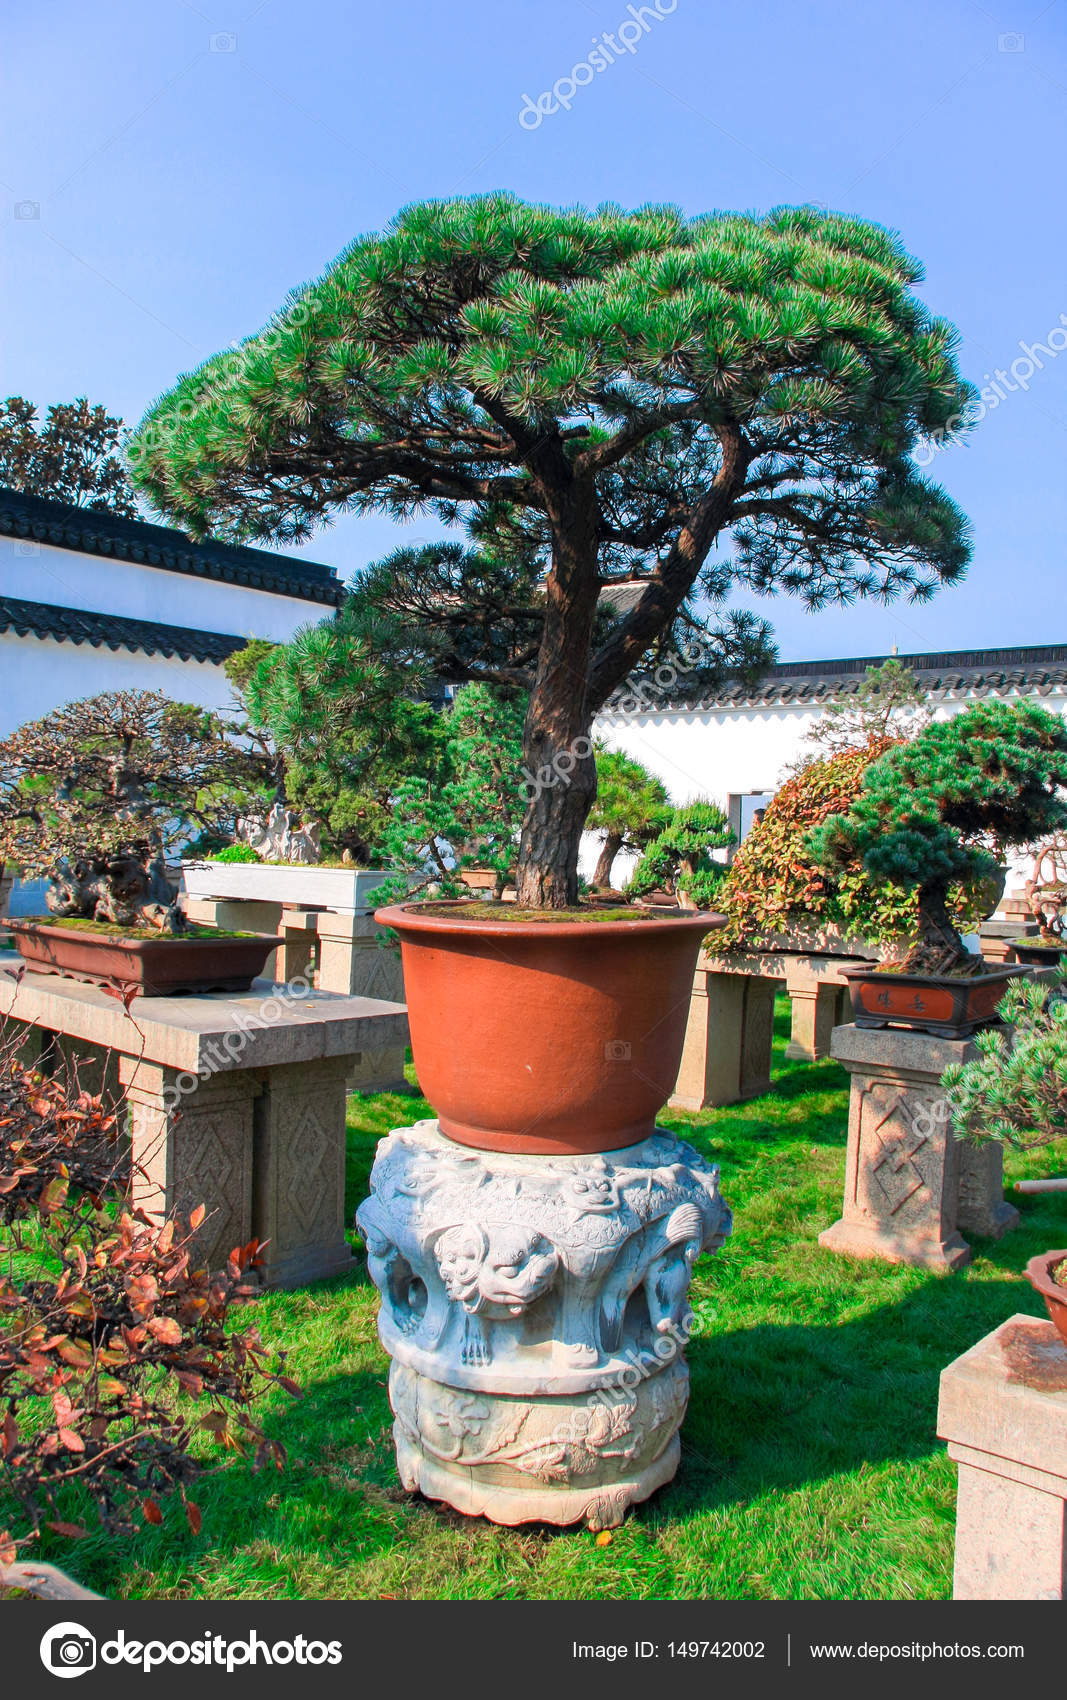 Chinese Pine Bonsai In A Bright Orange Pot In The Garden Stock